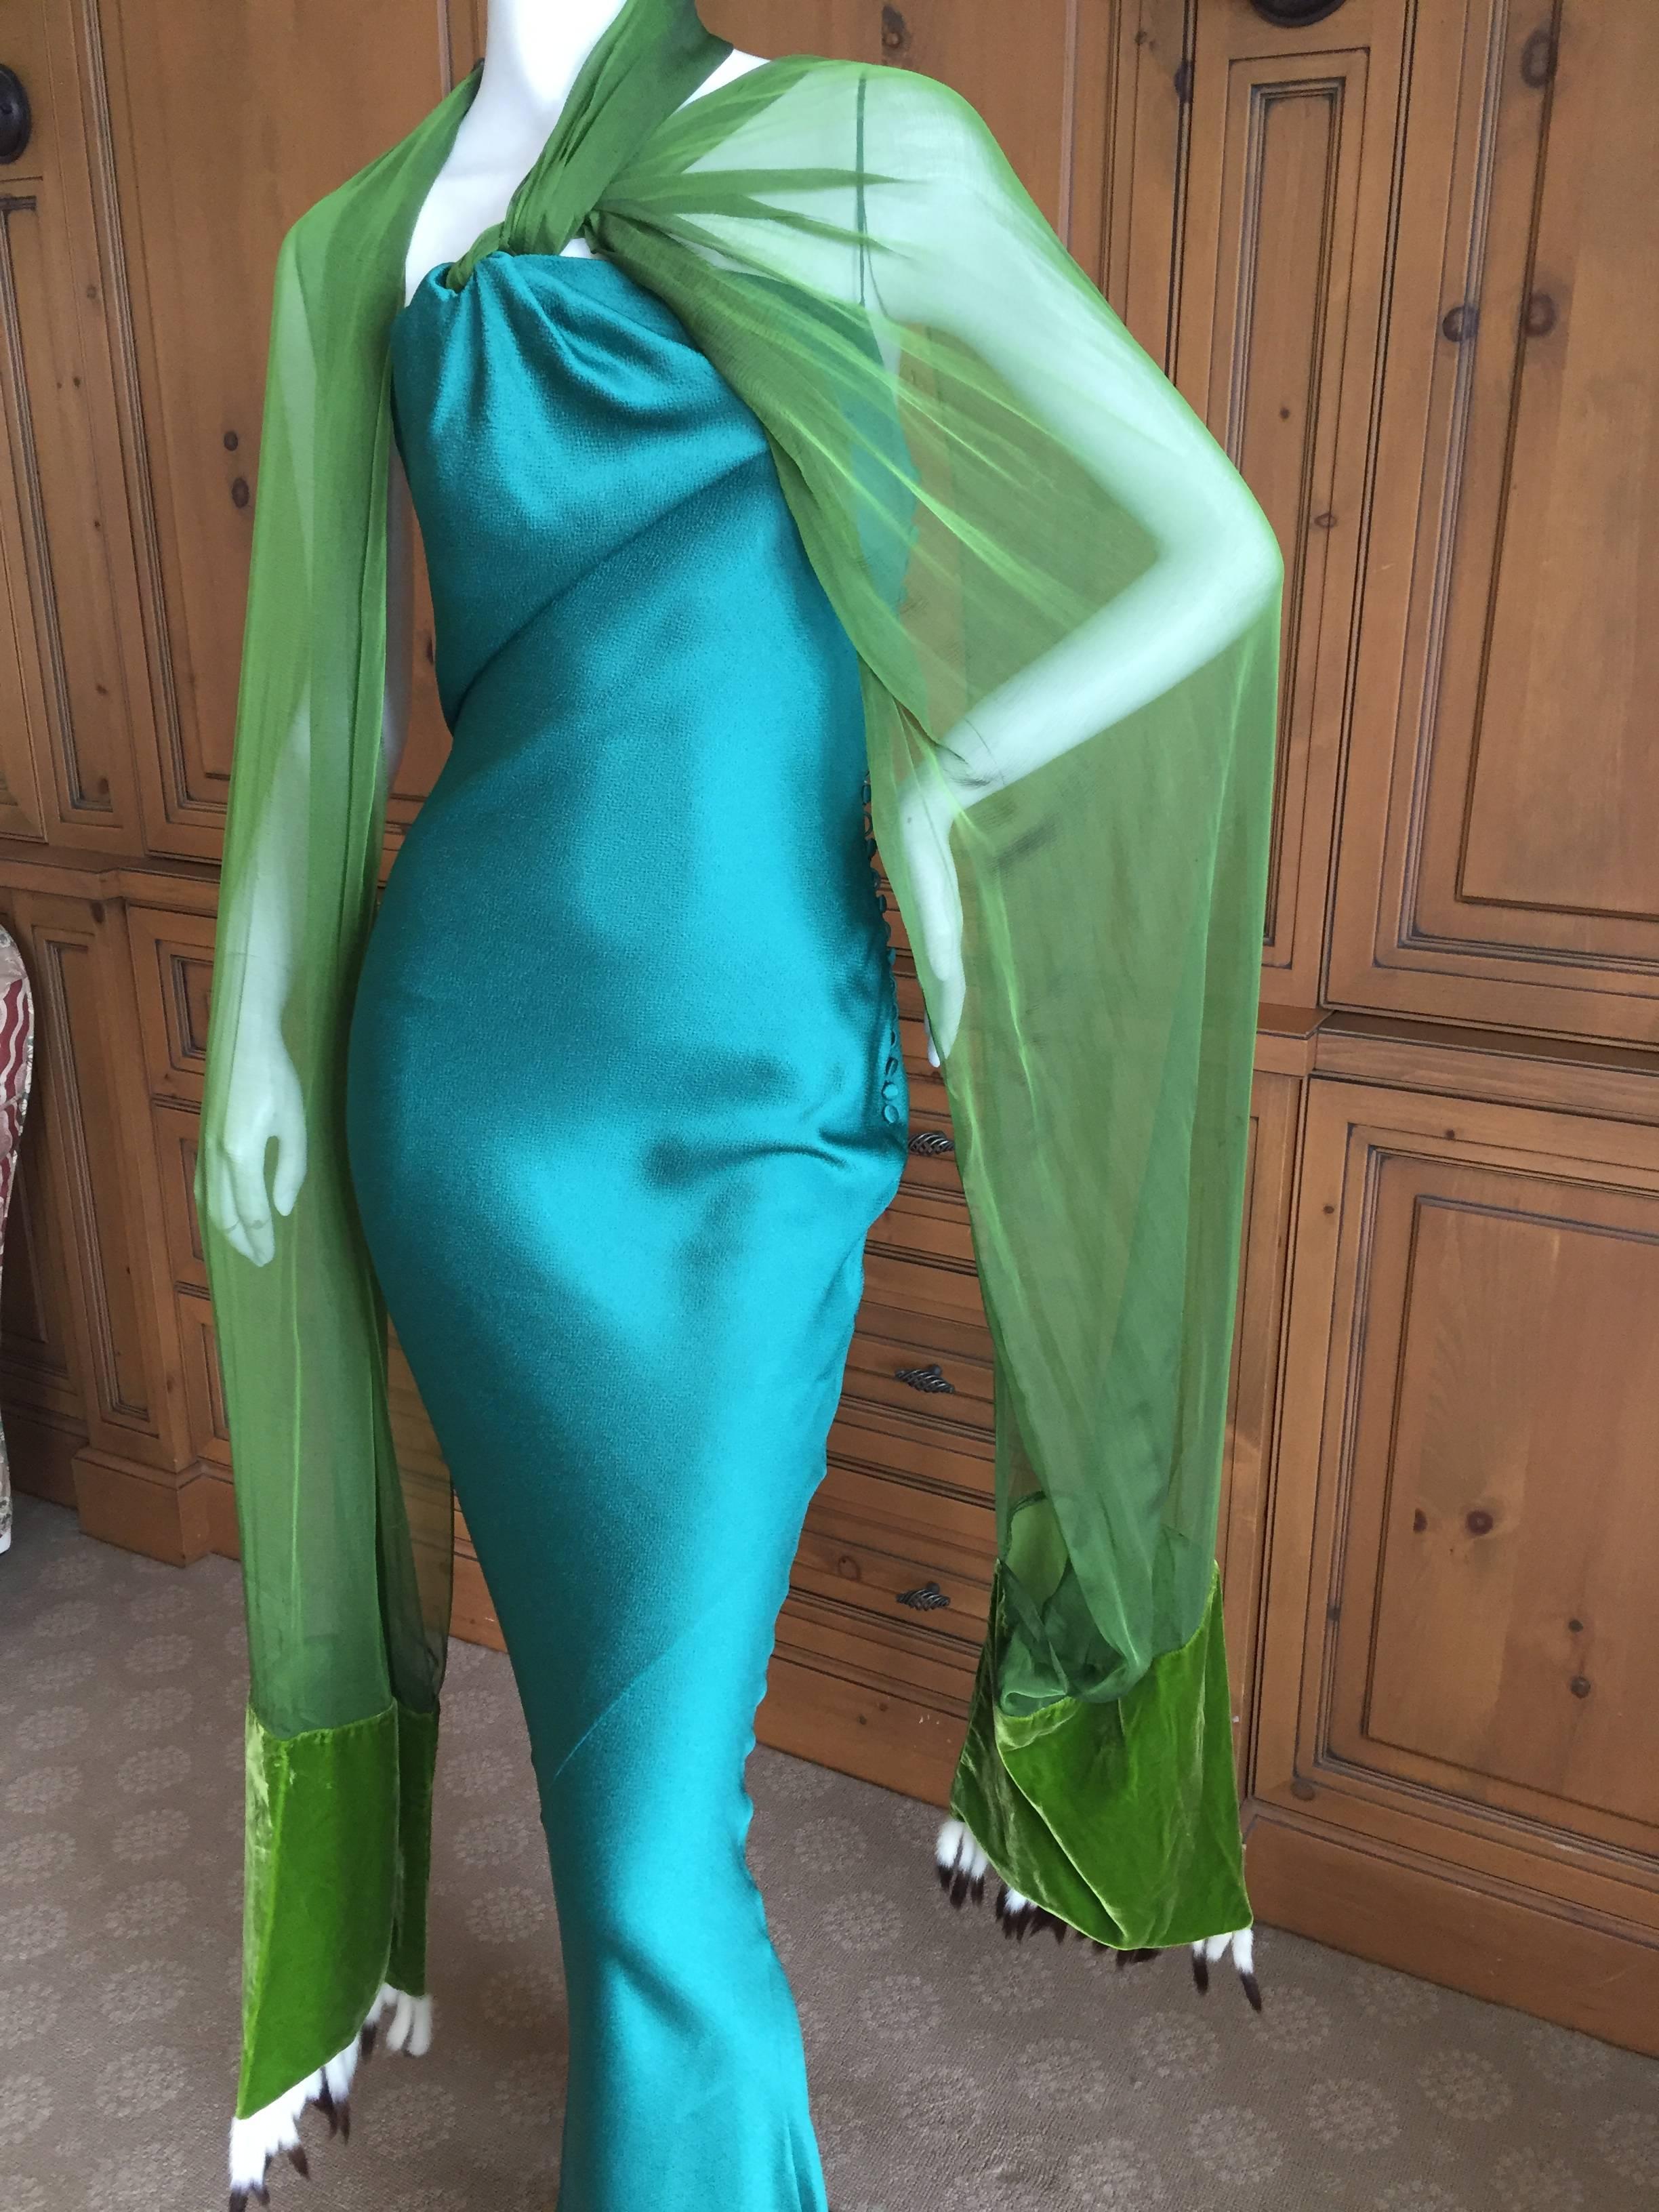 Christian Dior by Galliano Bias Cut Green Dress w Ermine Tail Trim Scarves 1990s 5